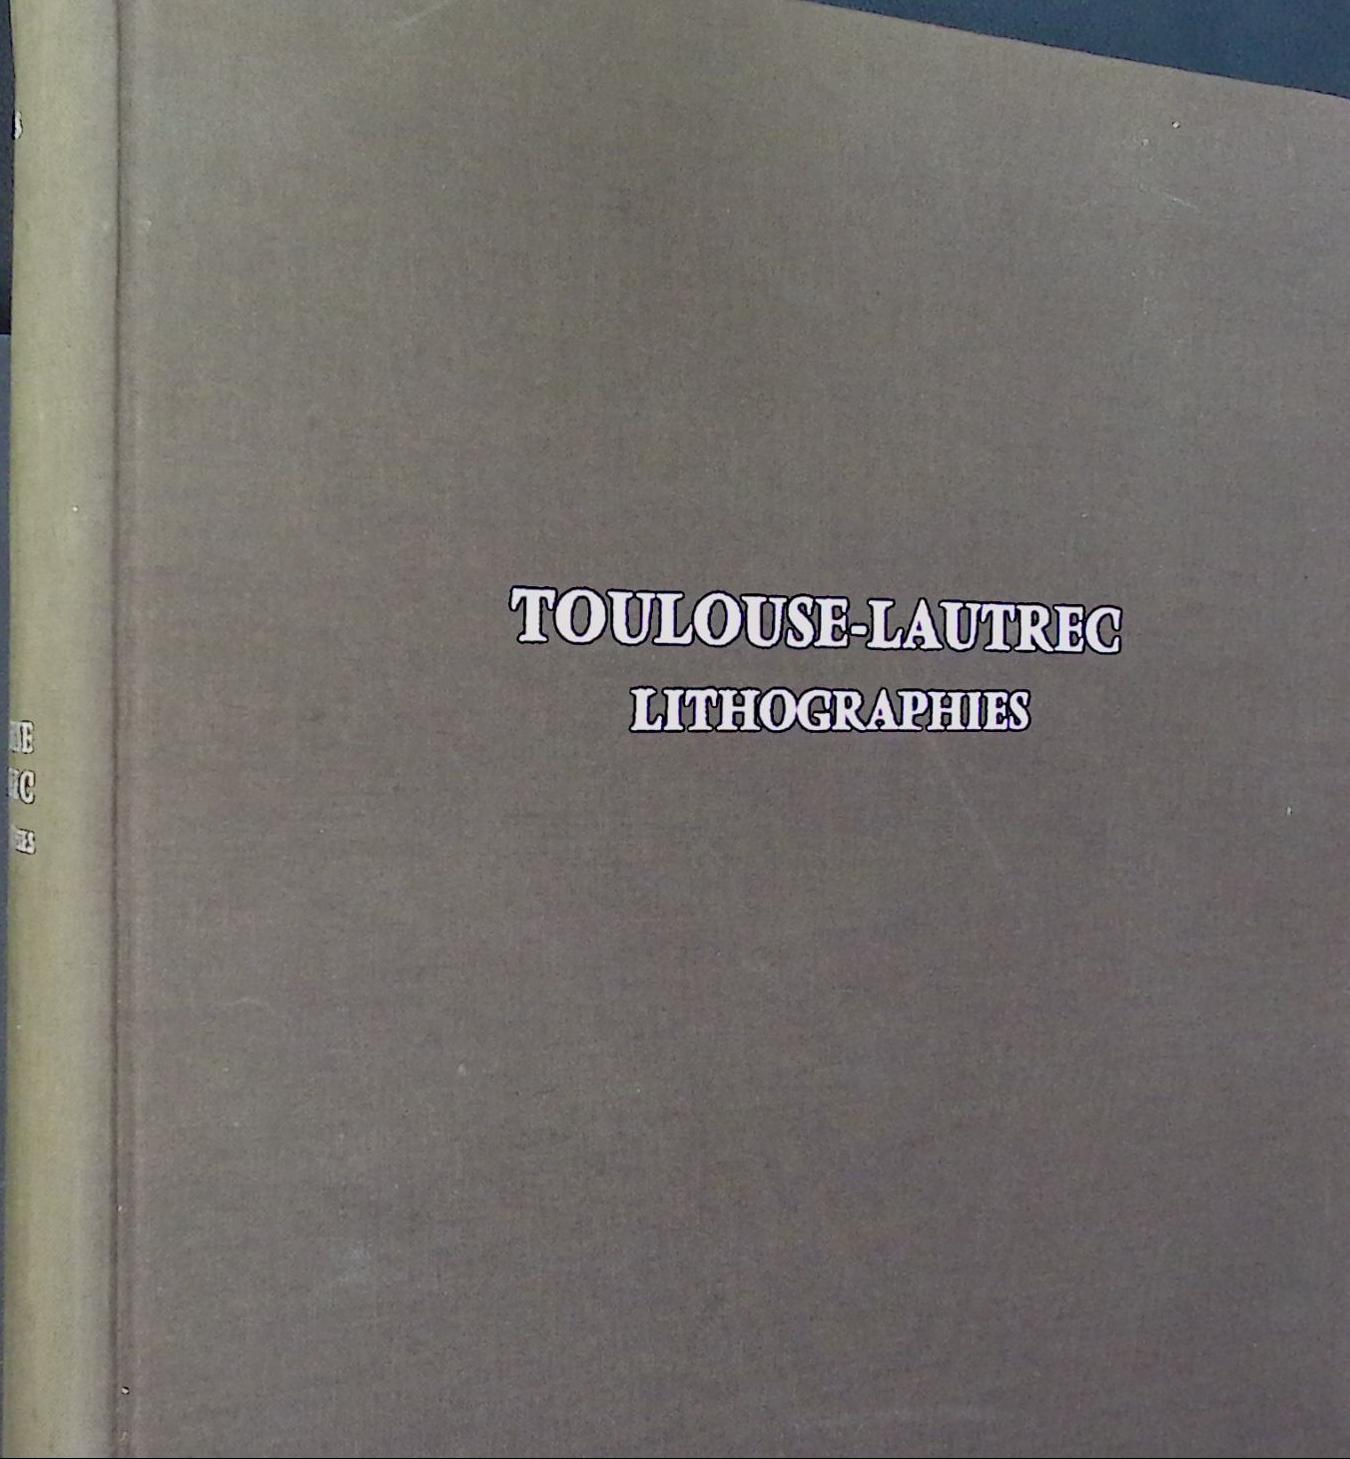 Toulouse-Lautrec: Lithographies - Pointes Sèches. [Complete works]